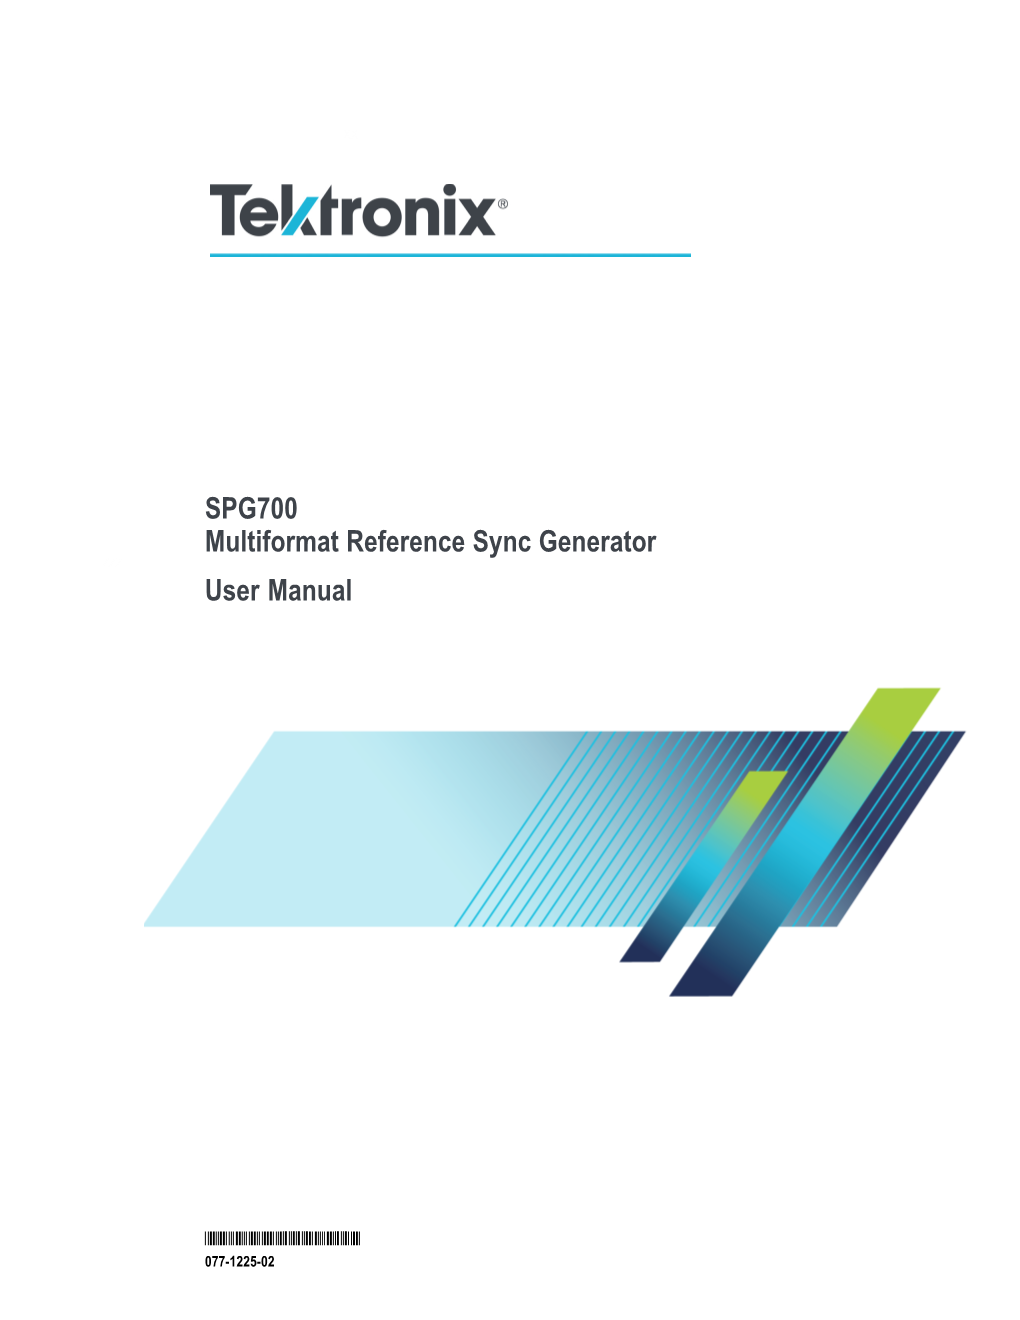 SPG700 Multiformat Reference Sync Generator User Manual